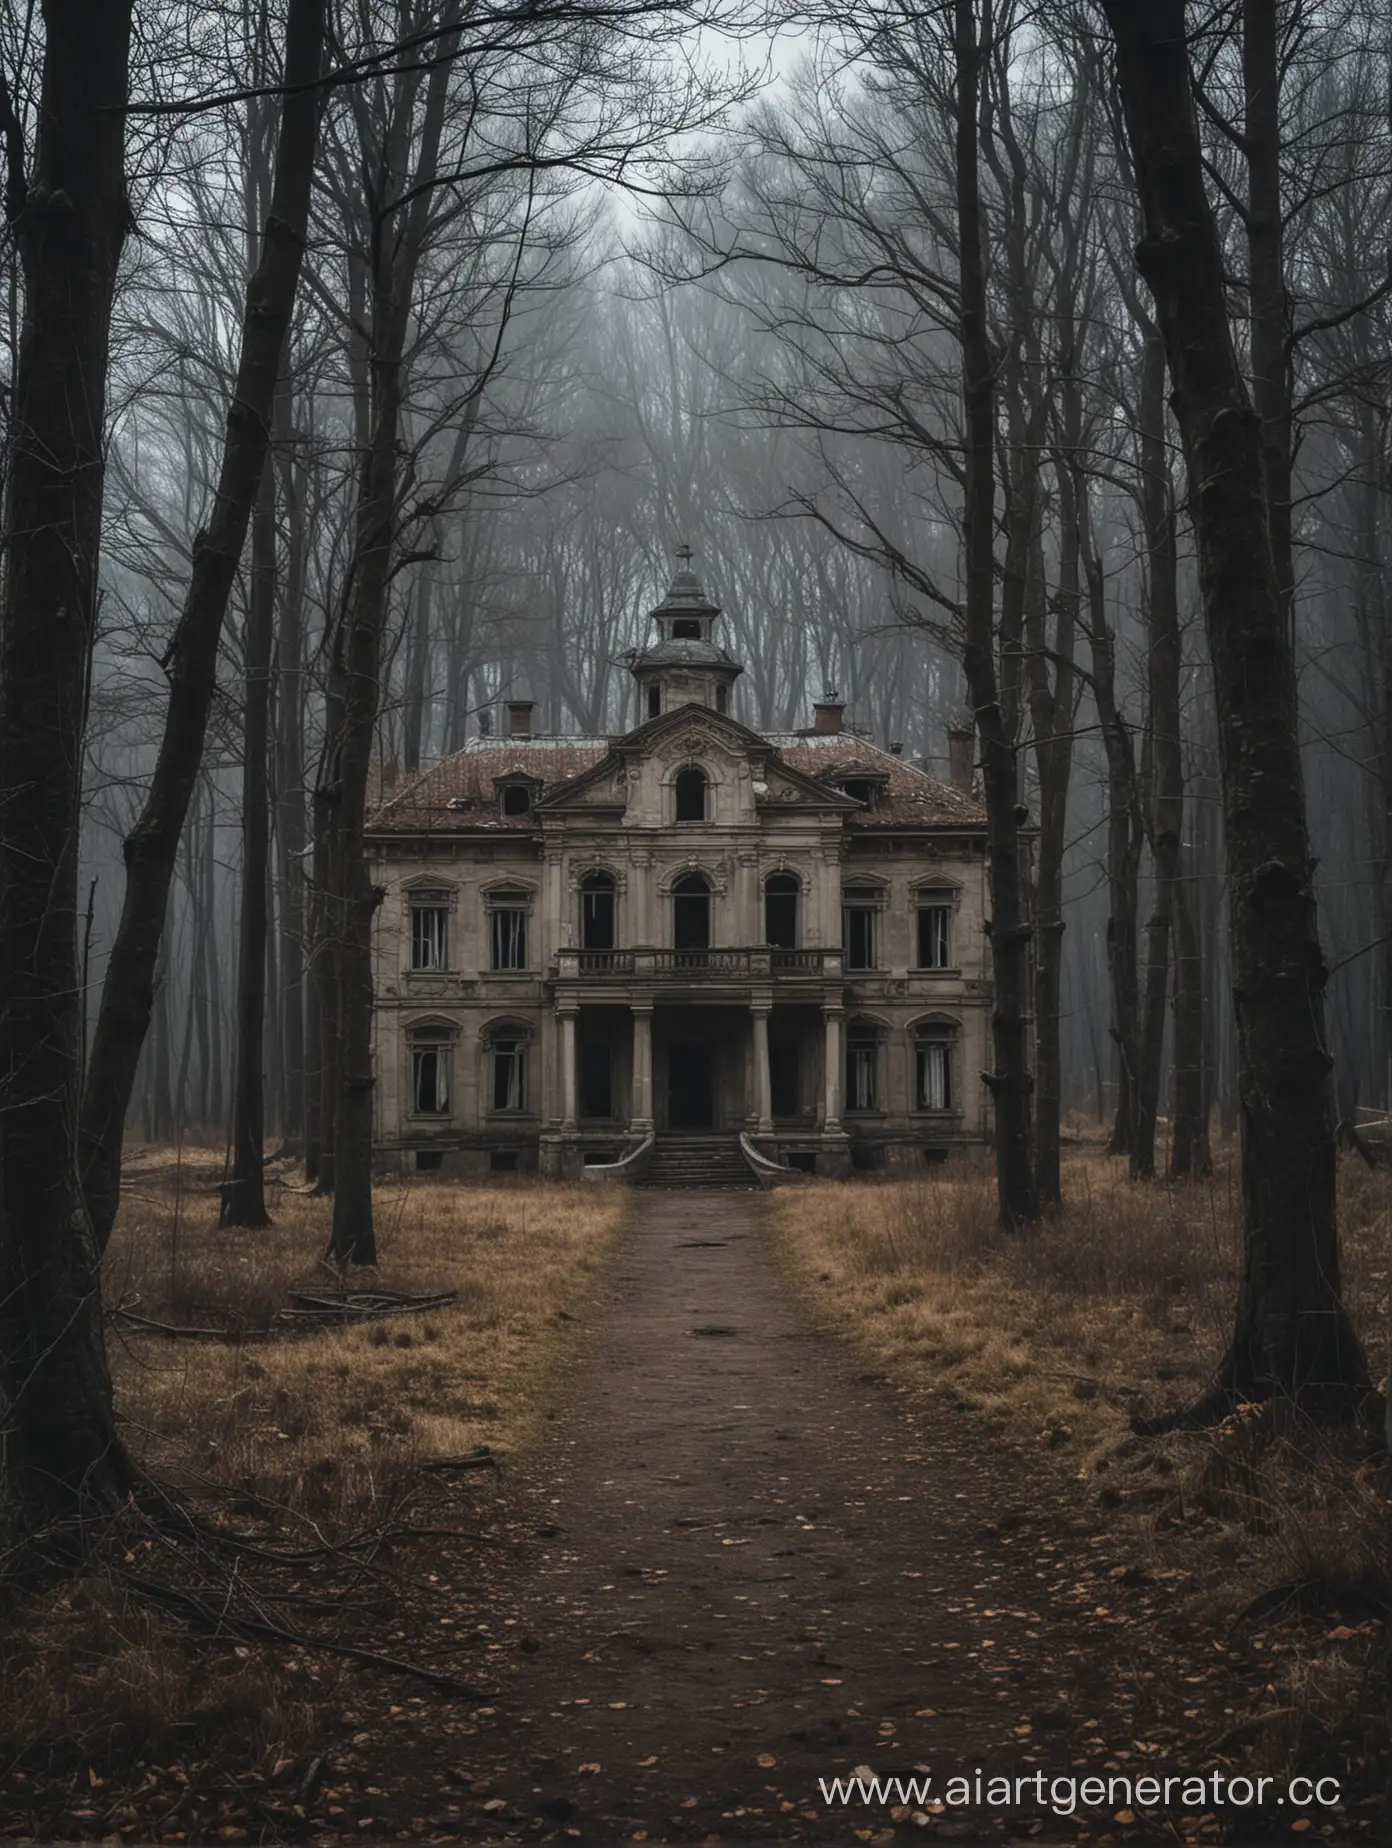 Eerie-Abandoned-Mansion-in-Dark-Forest-Haunting-Urban-Wilderness